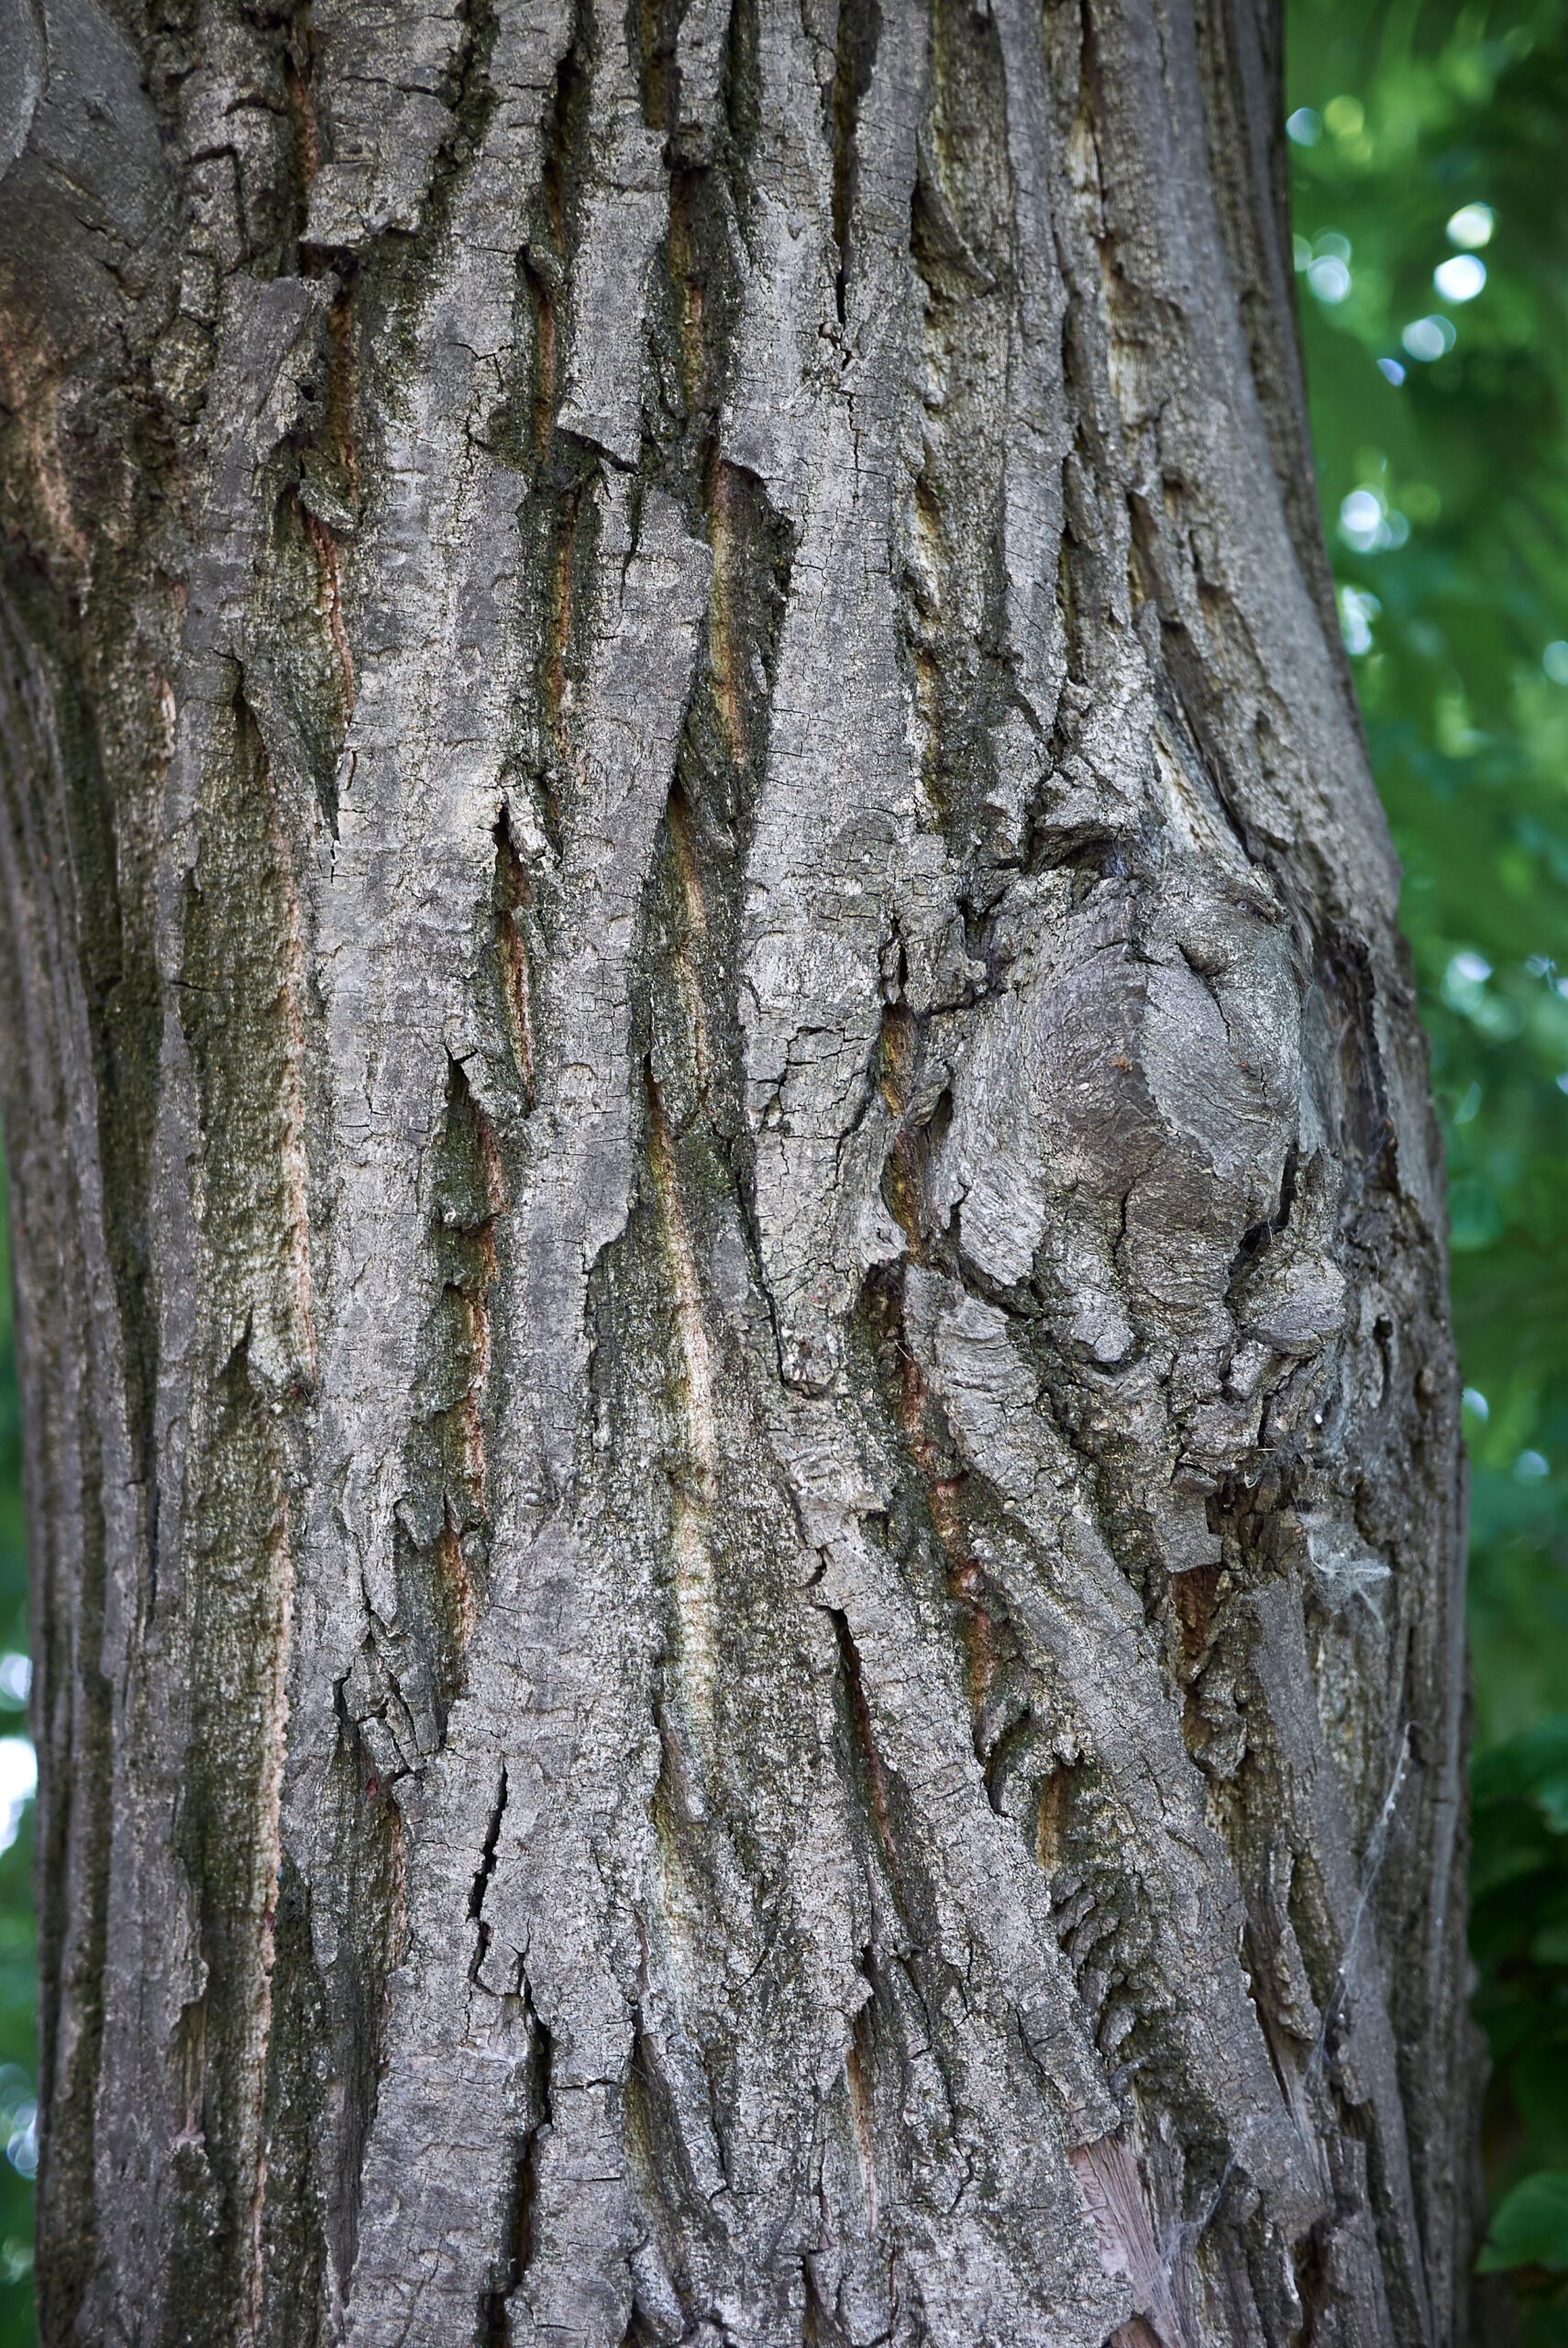 Pterocarys tree bark